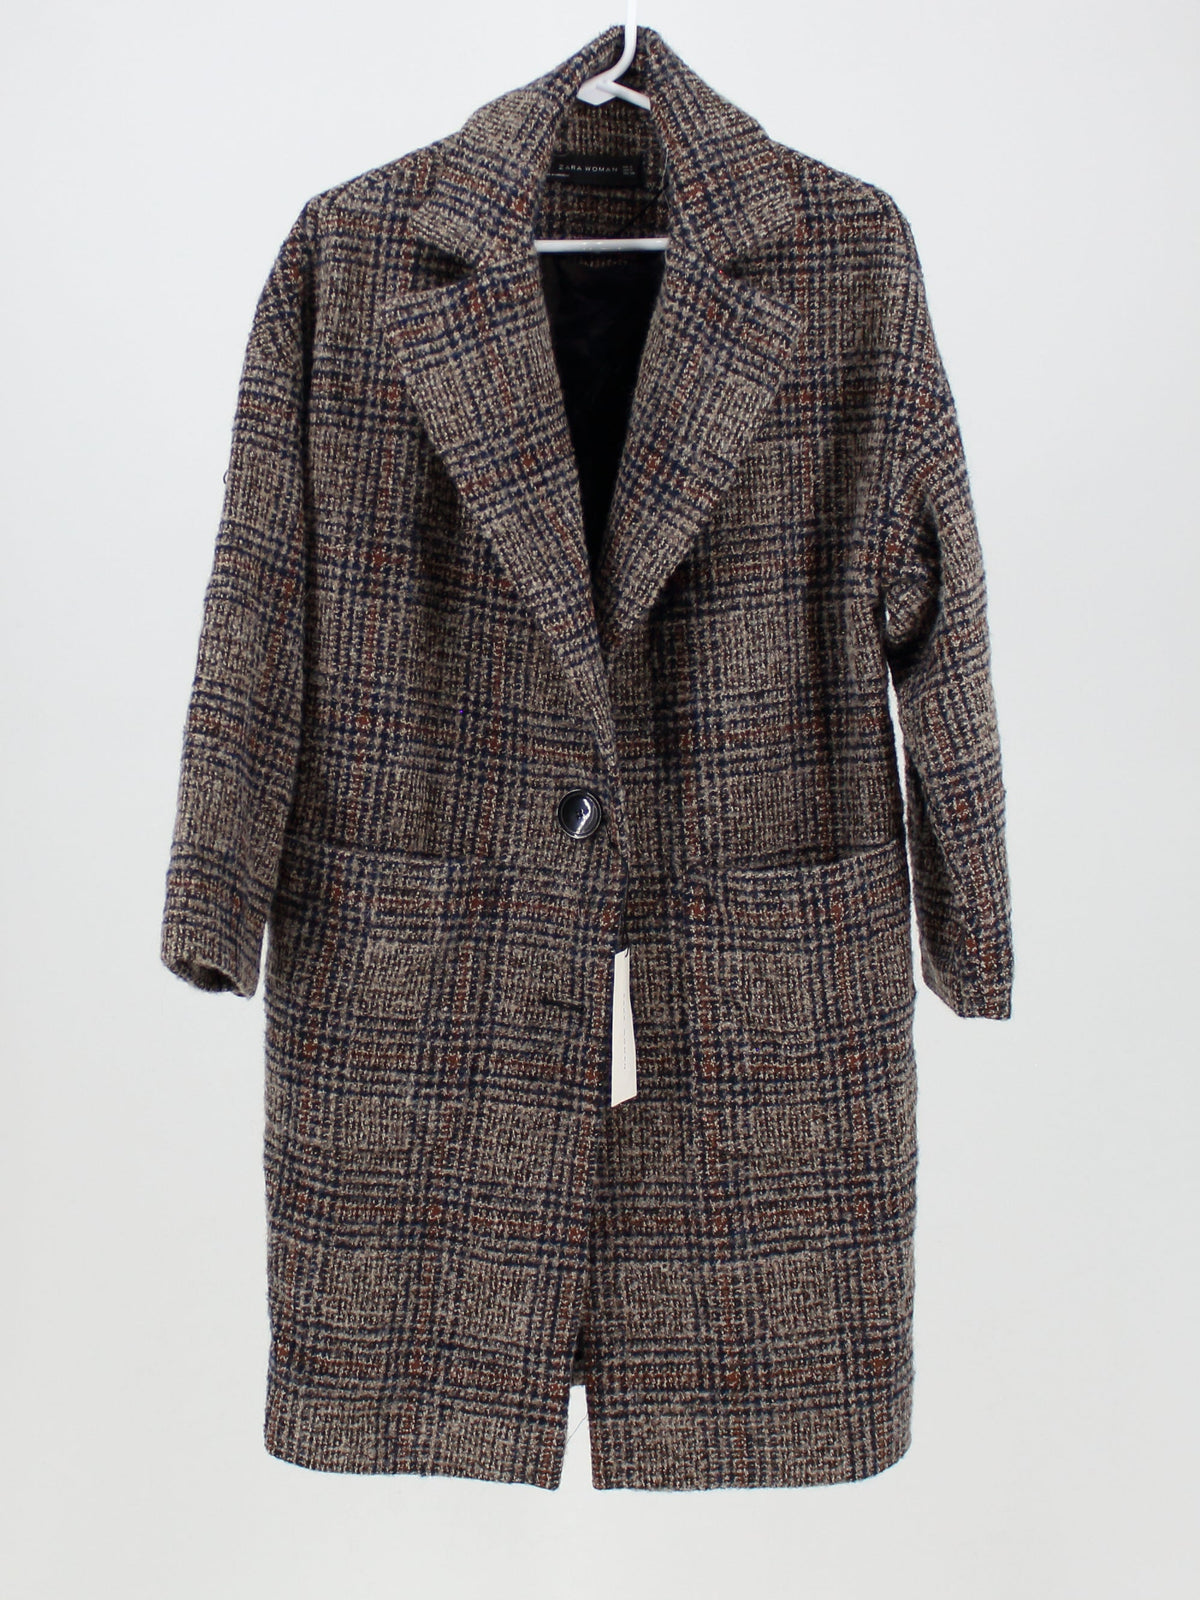 Zara brown and navy check pattern wool coat